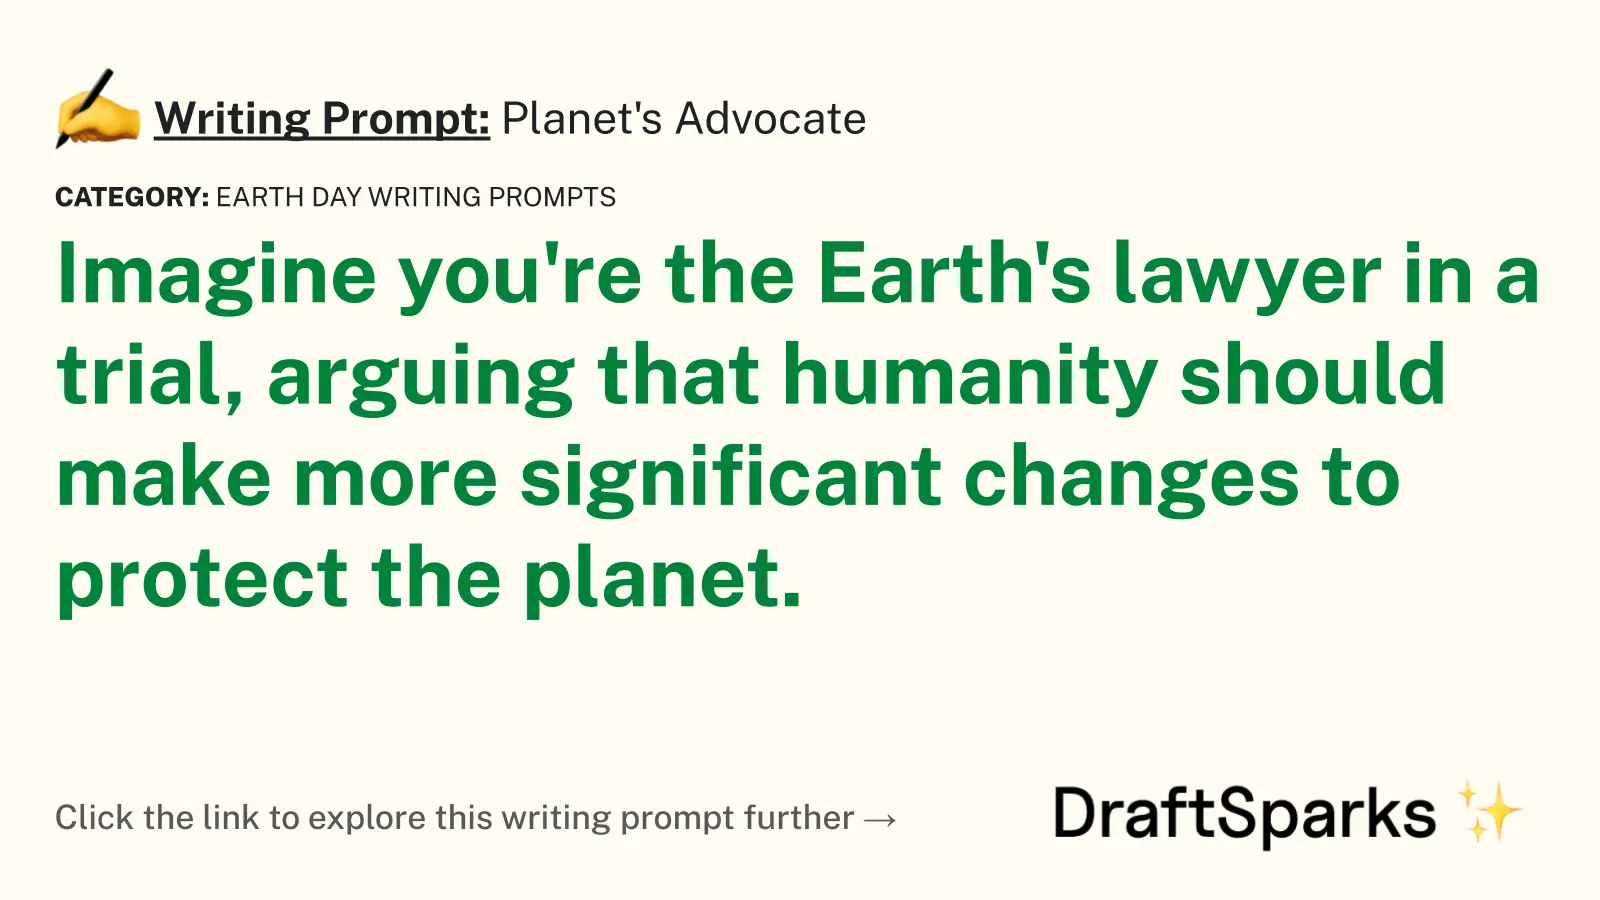 Planet’s Advocate